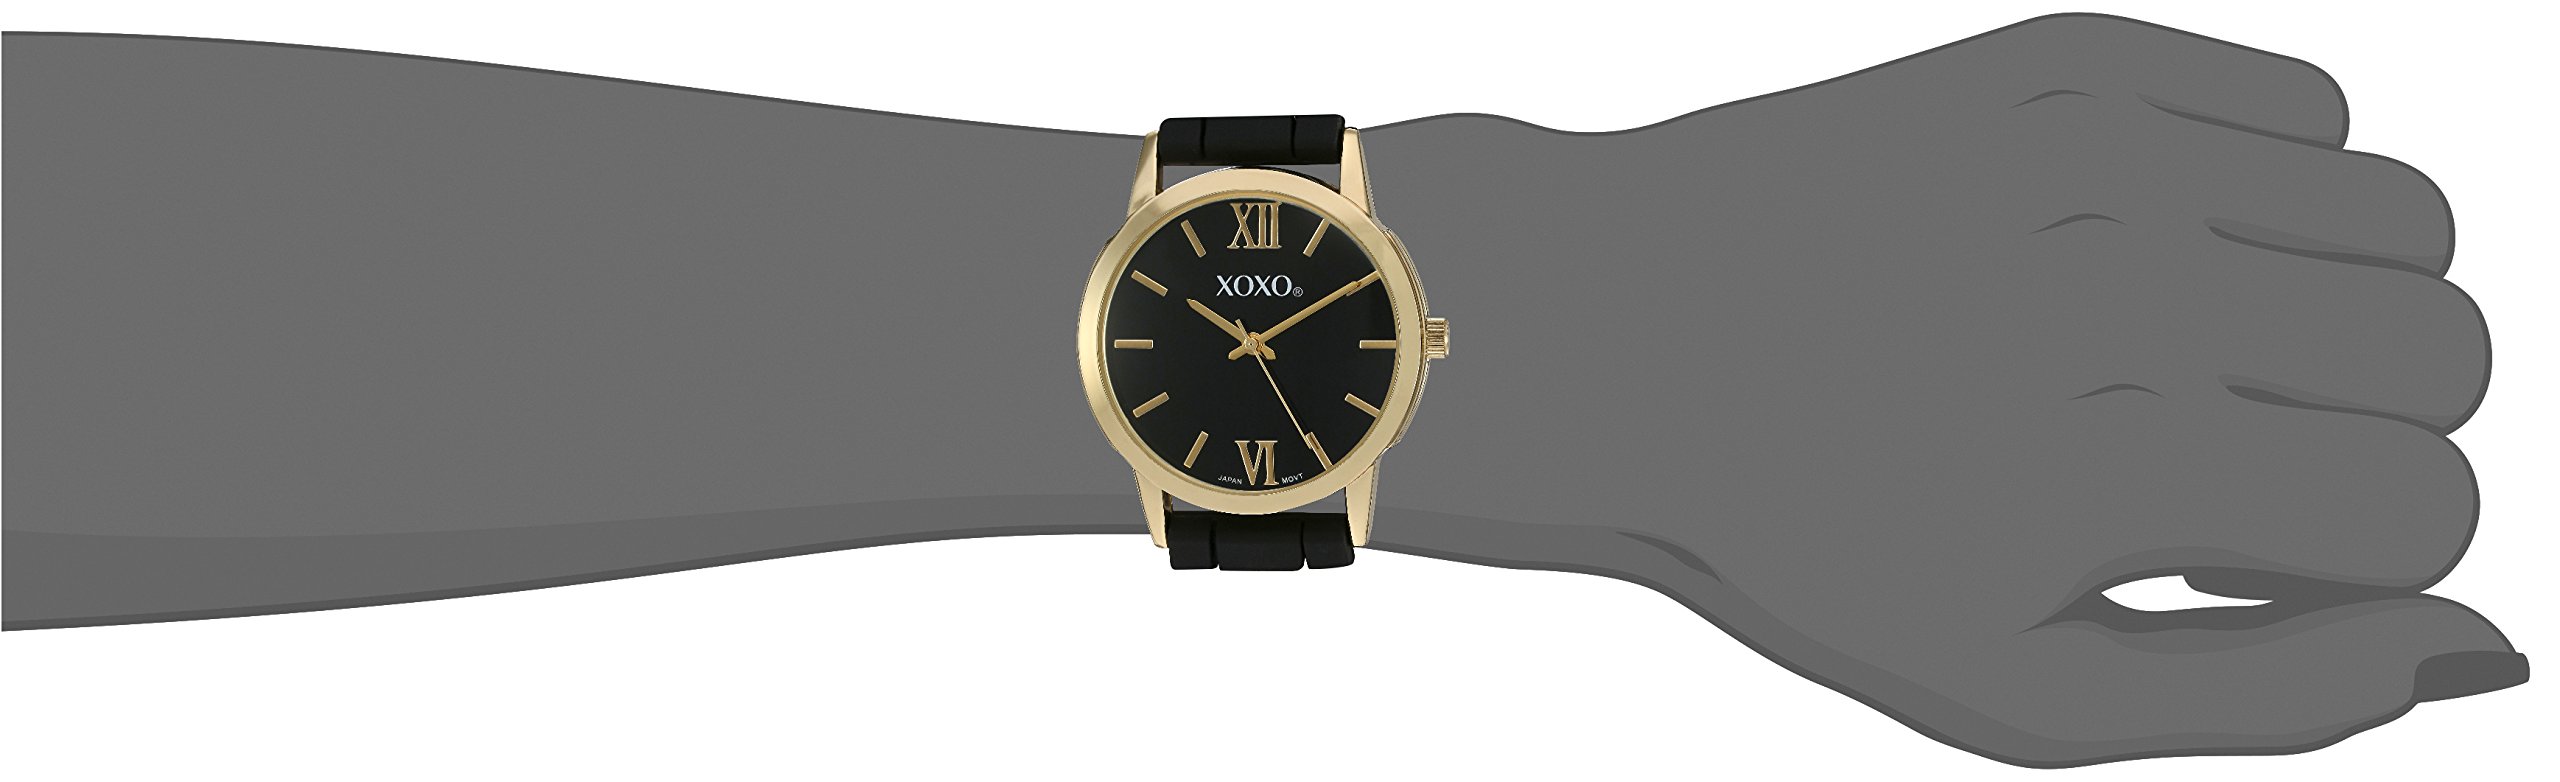 XOXO Women's Quartz Metal and Rubber Watch, Color:Black (Model: XO8101)